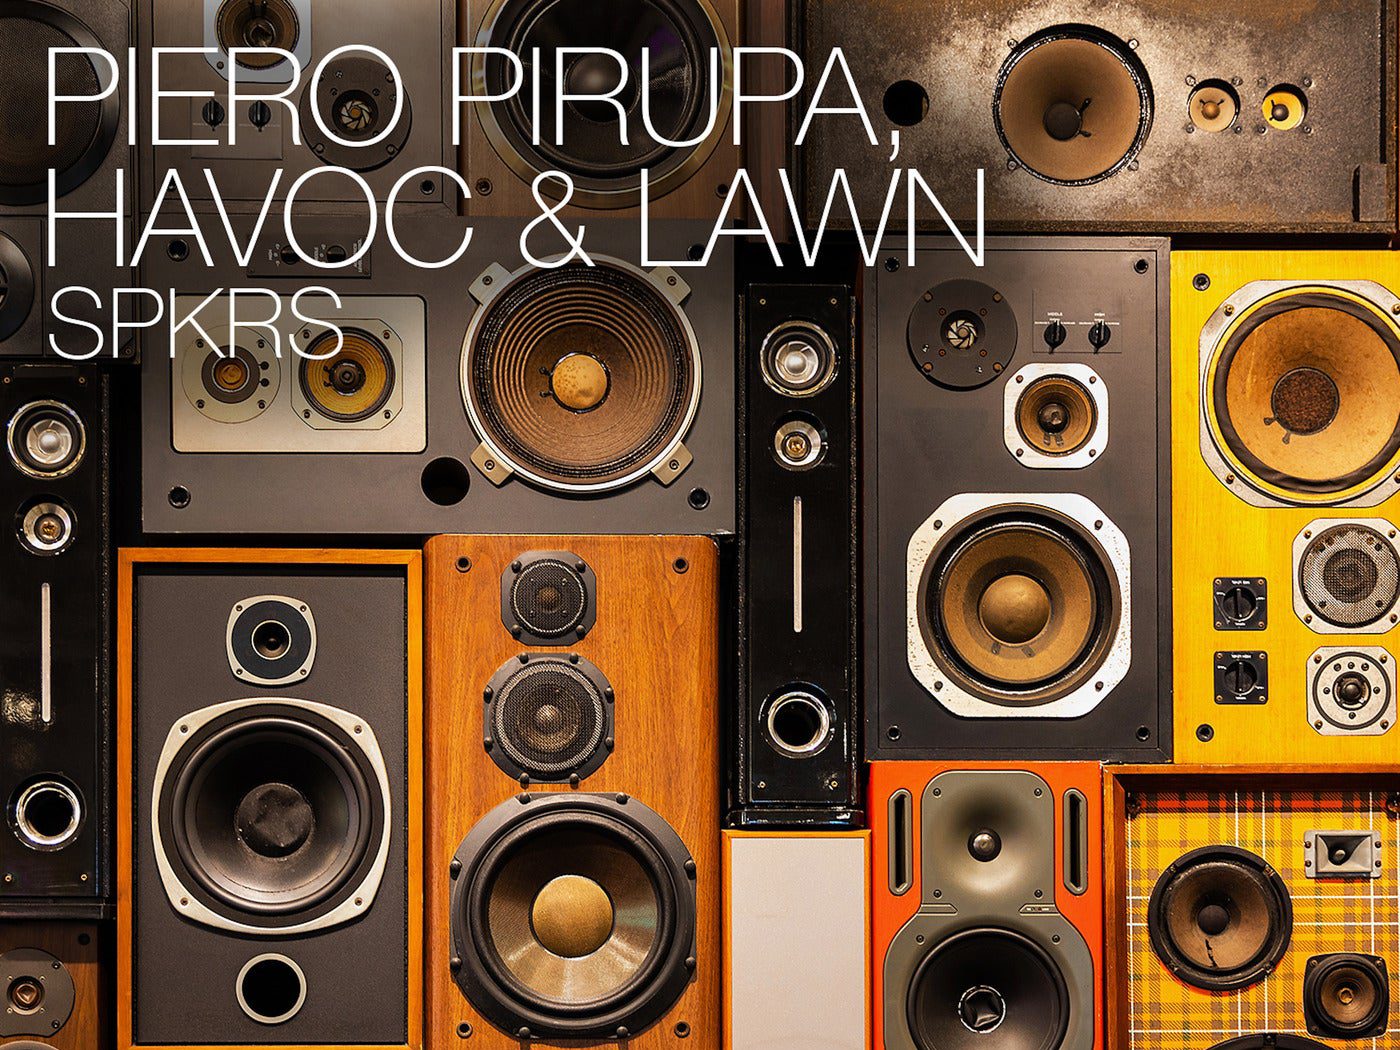 Piero Pirupa and Havoc & Lawn - SPKRS